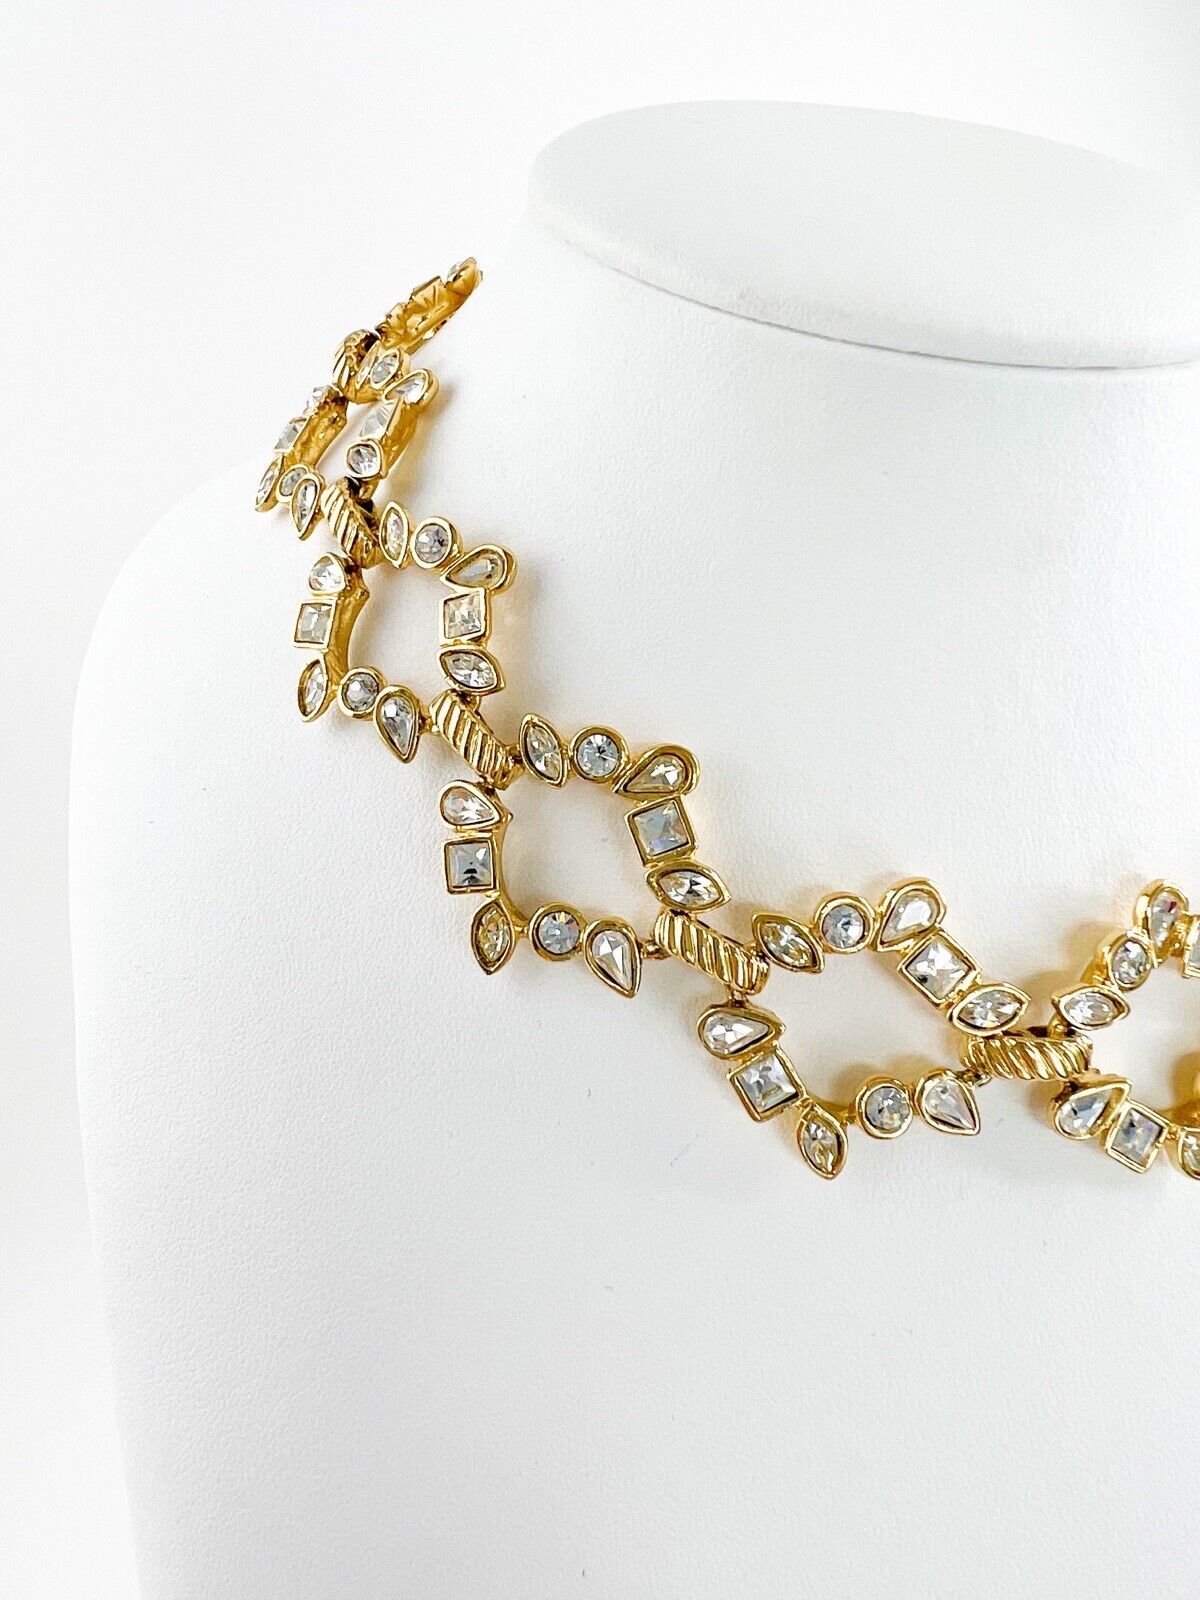 YSL Yves Saint Laurent Vintage Necklace Gold Charm